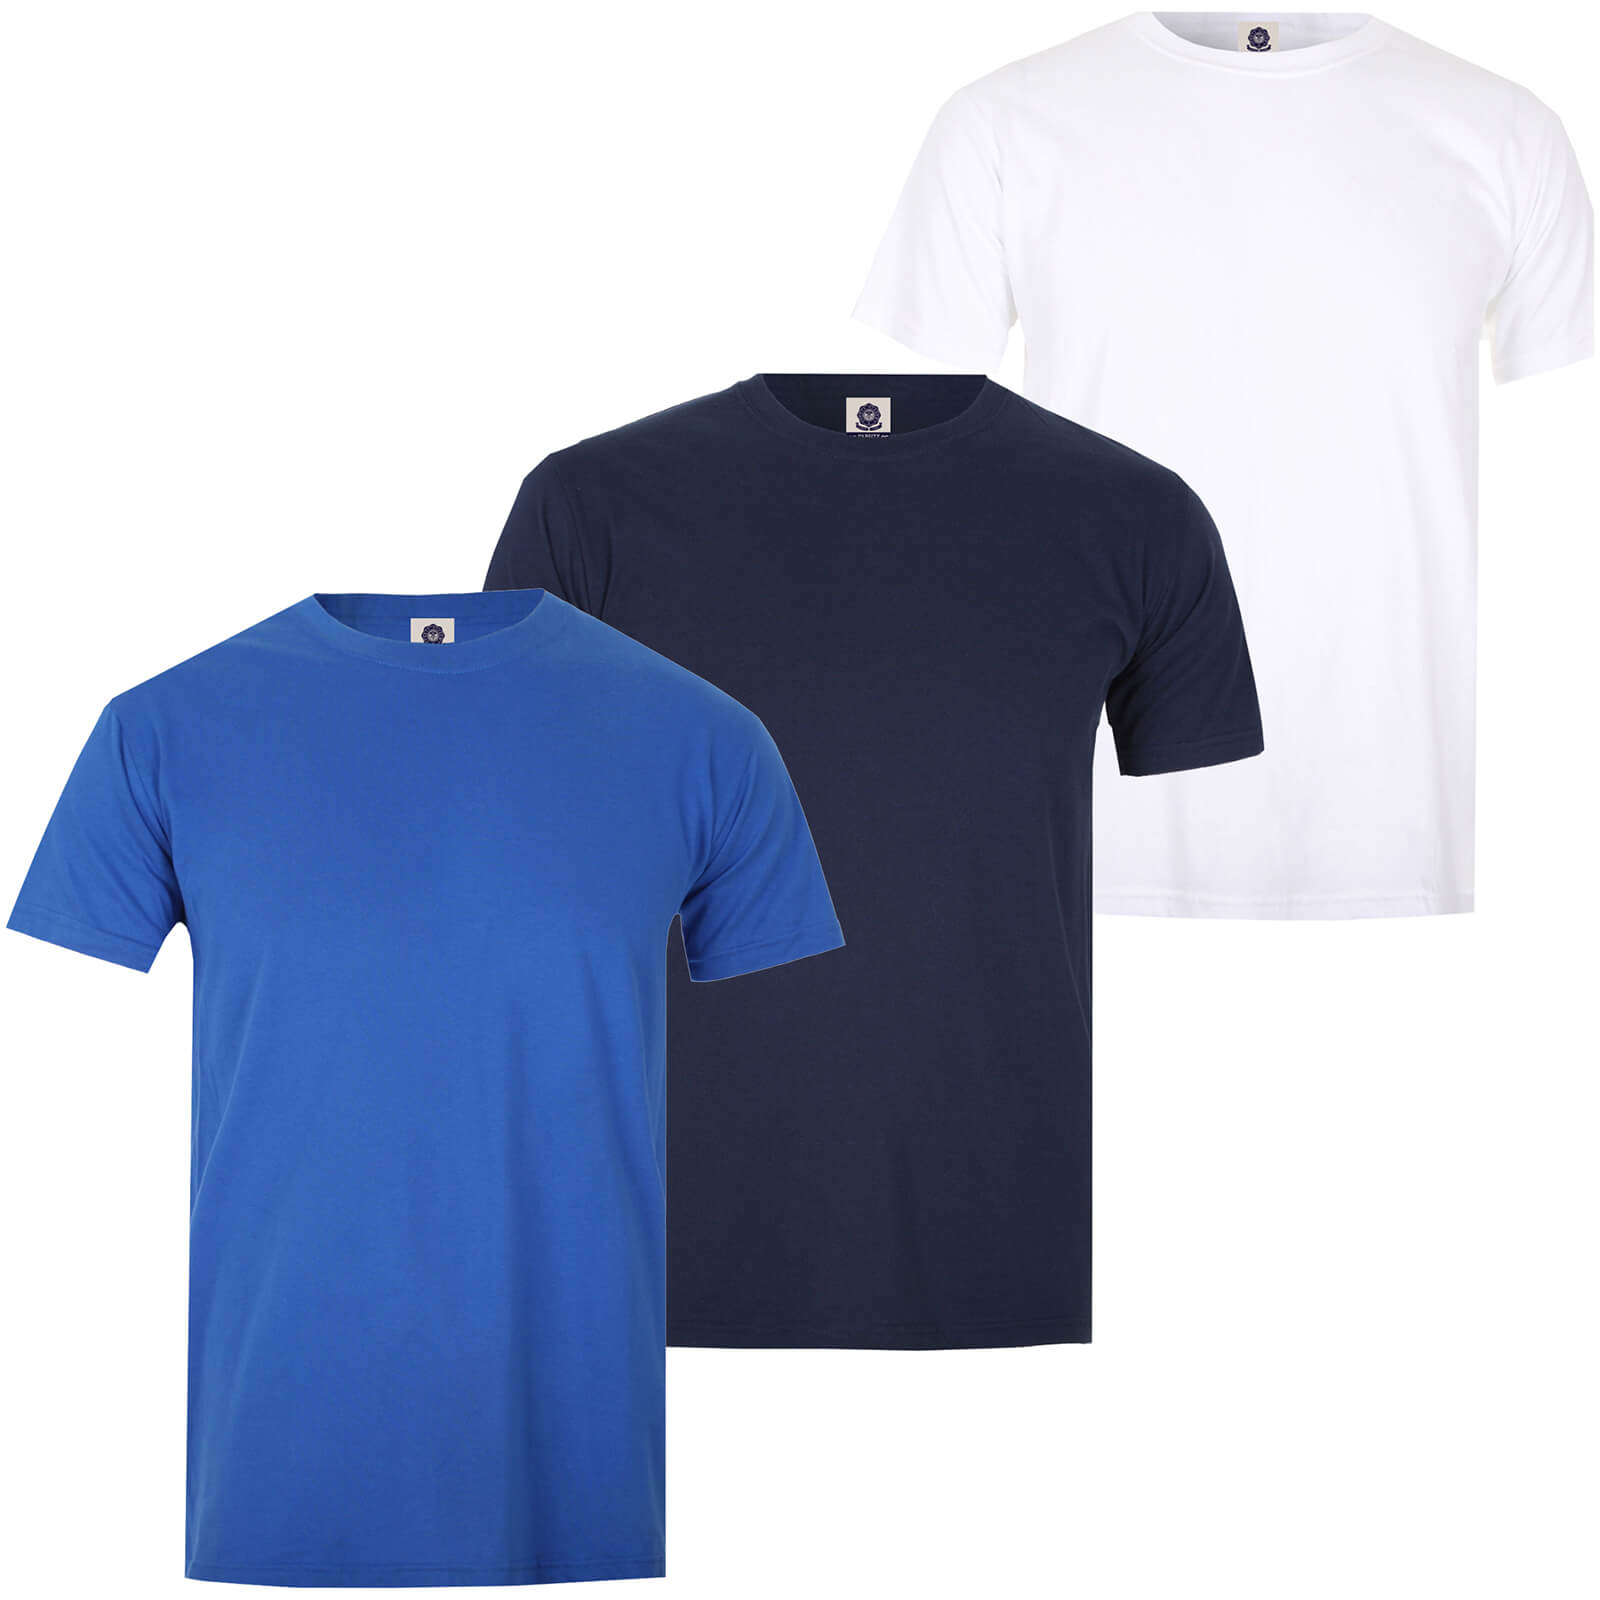 Varsity Team Players Men's T-Shirt 3 Pack - Royal/Navy/White - L